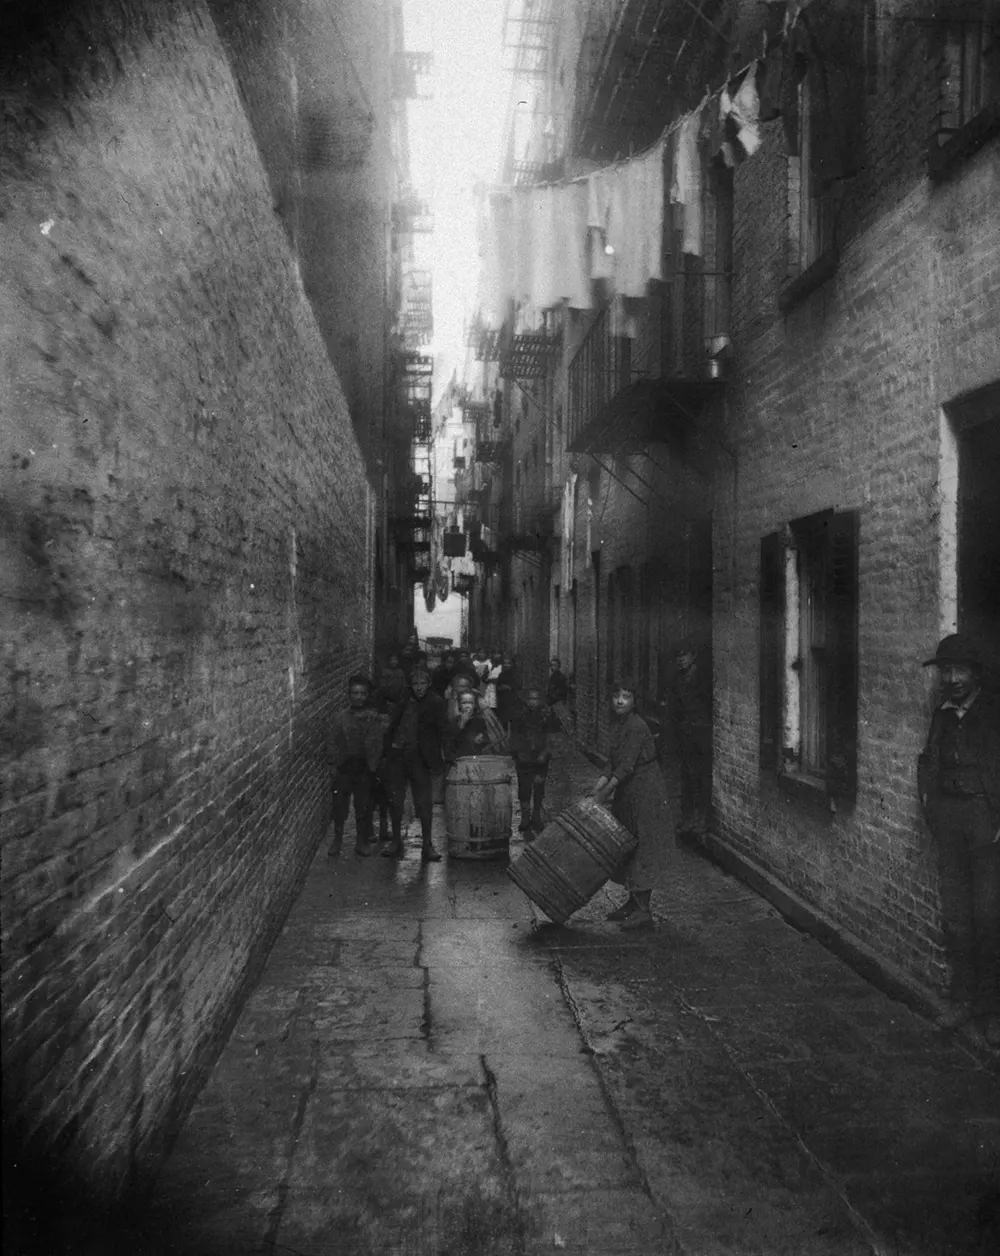 Children Play With Barrels In An Alley Between Tenement Buildings In Gotham Court, 38 Cherry Street, 1890.